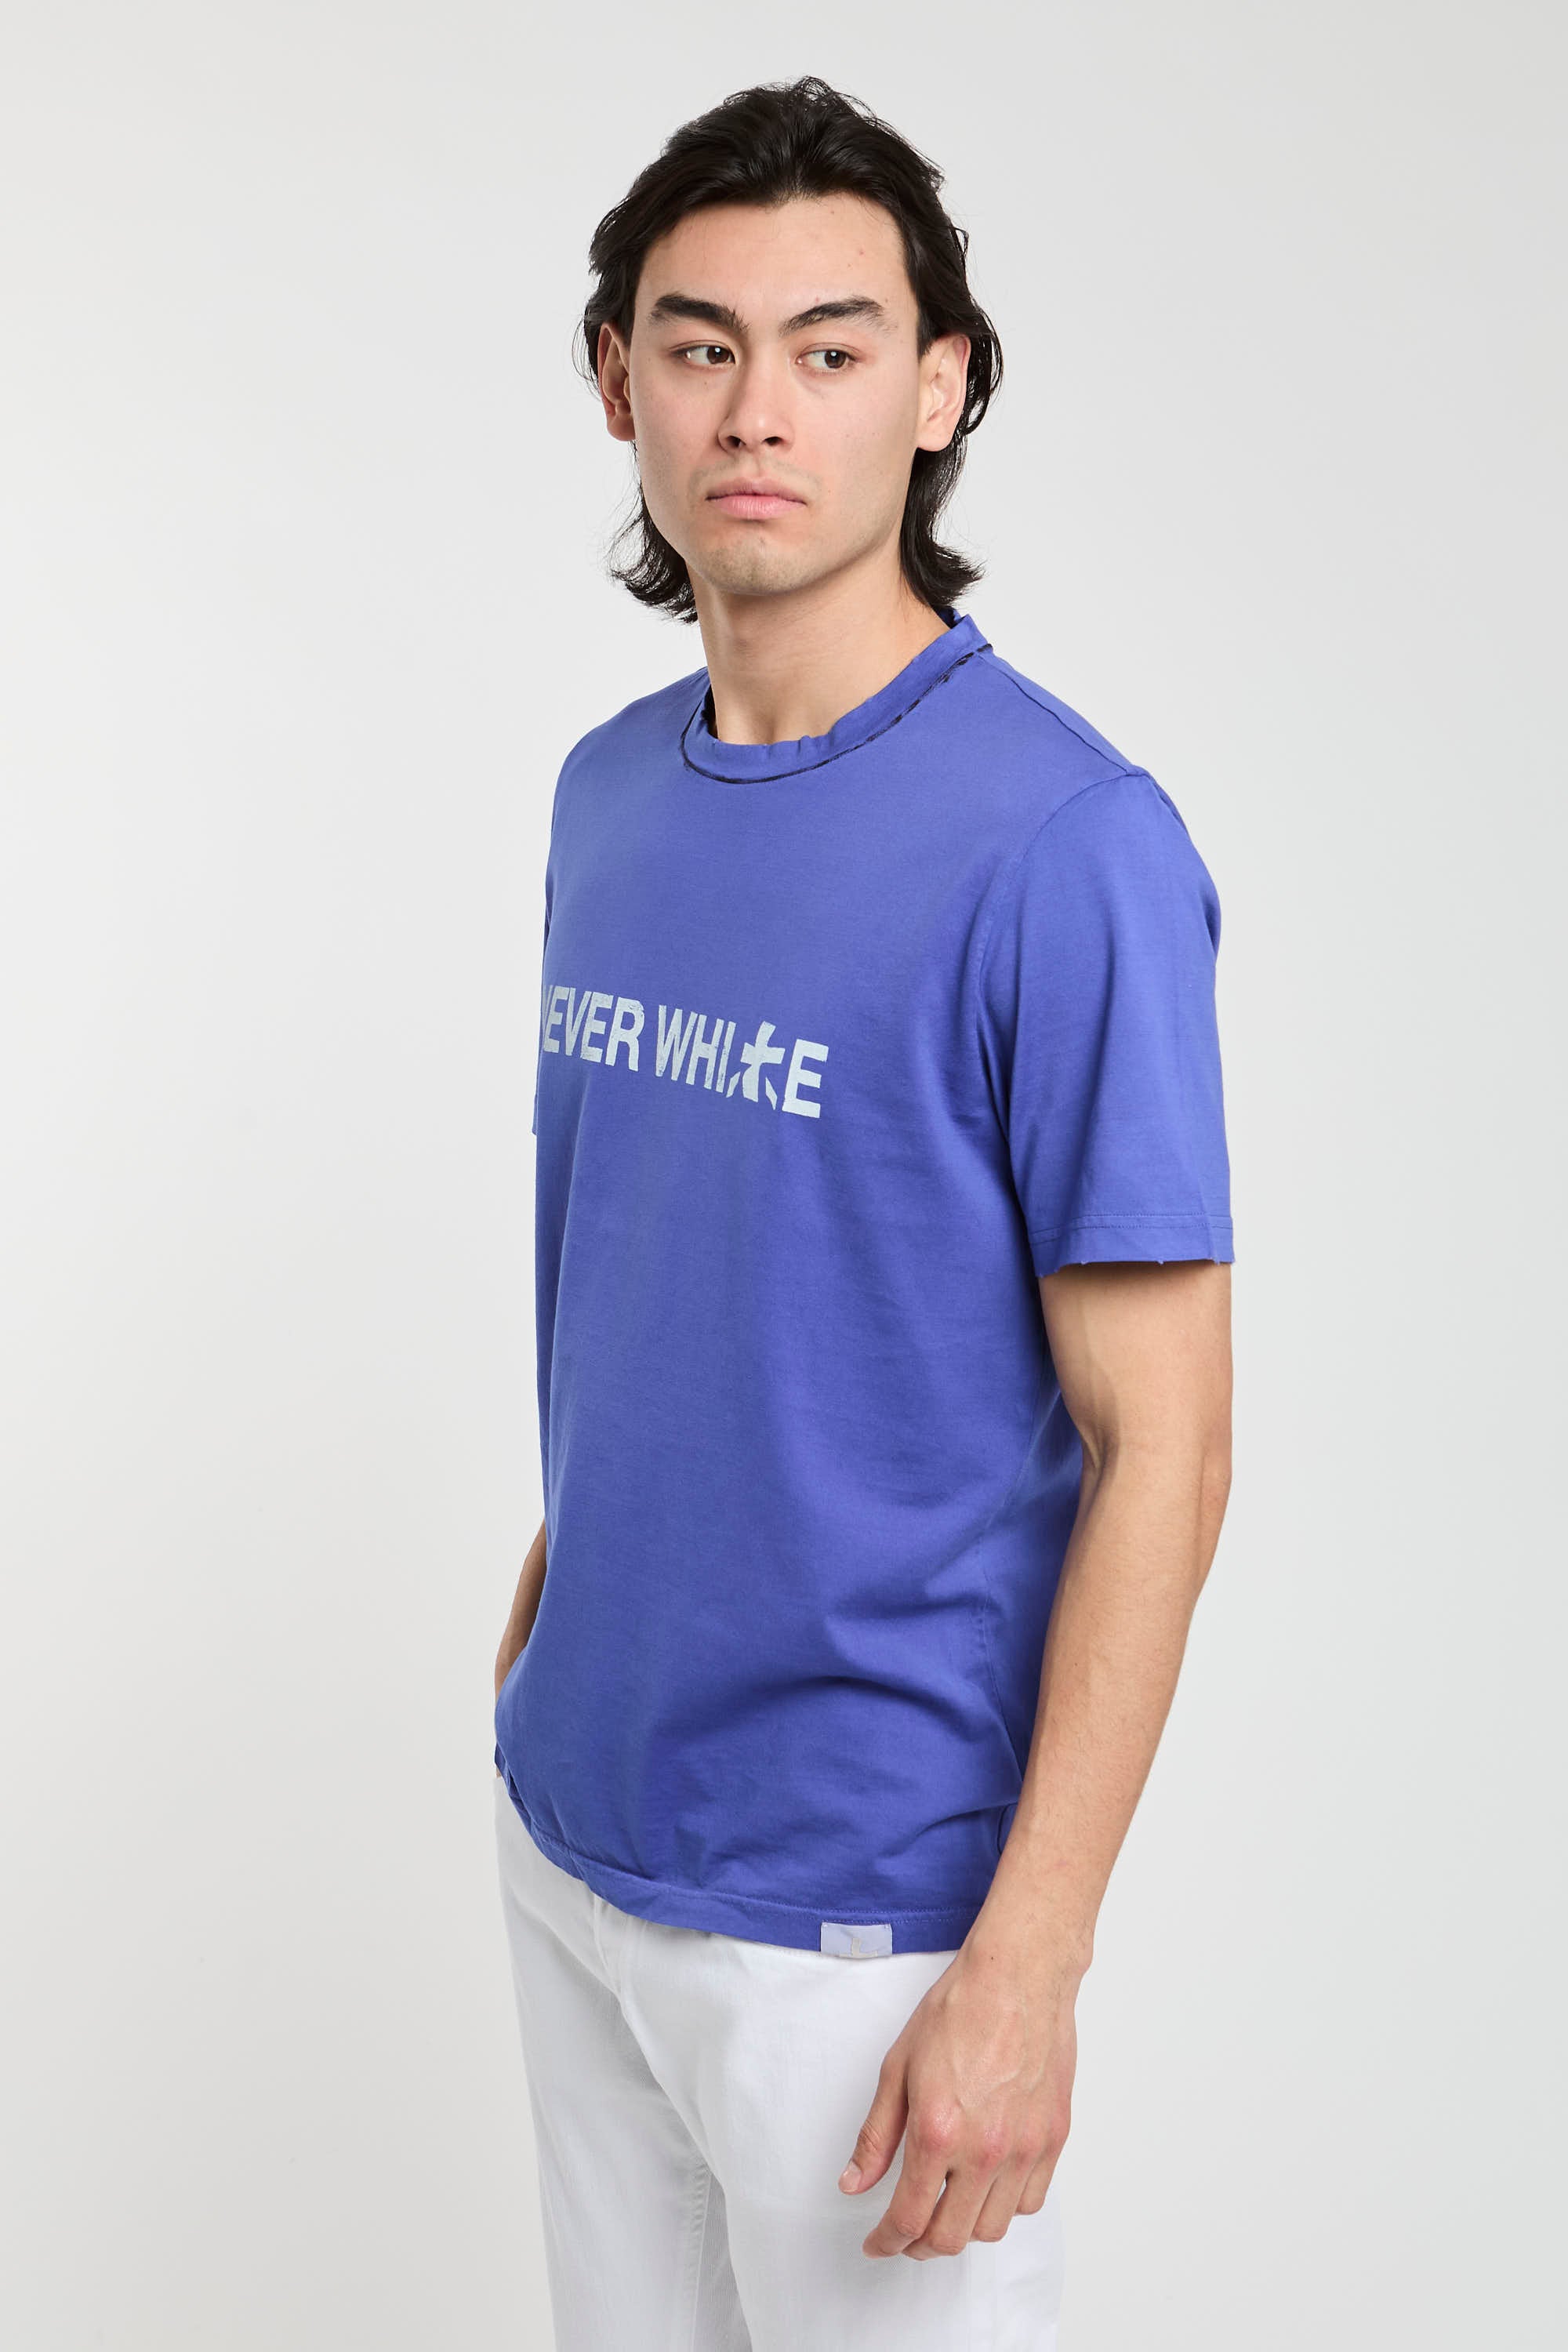 Premiata T-Shirt 'Never White' Baumwolle Blau-3